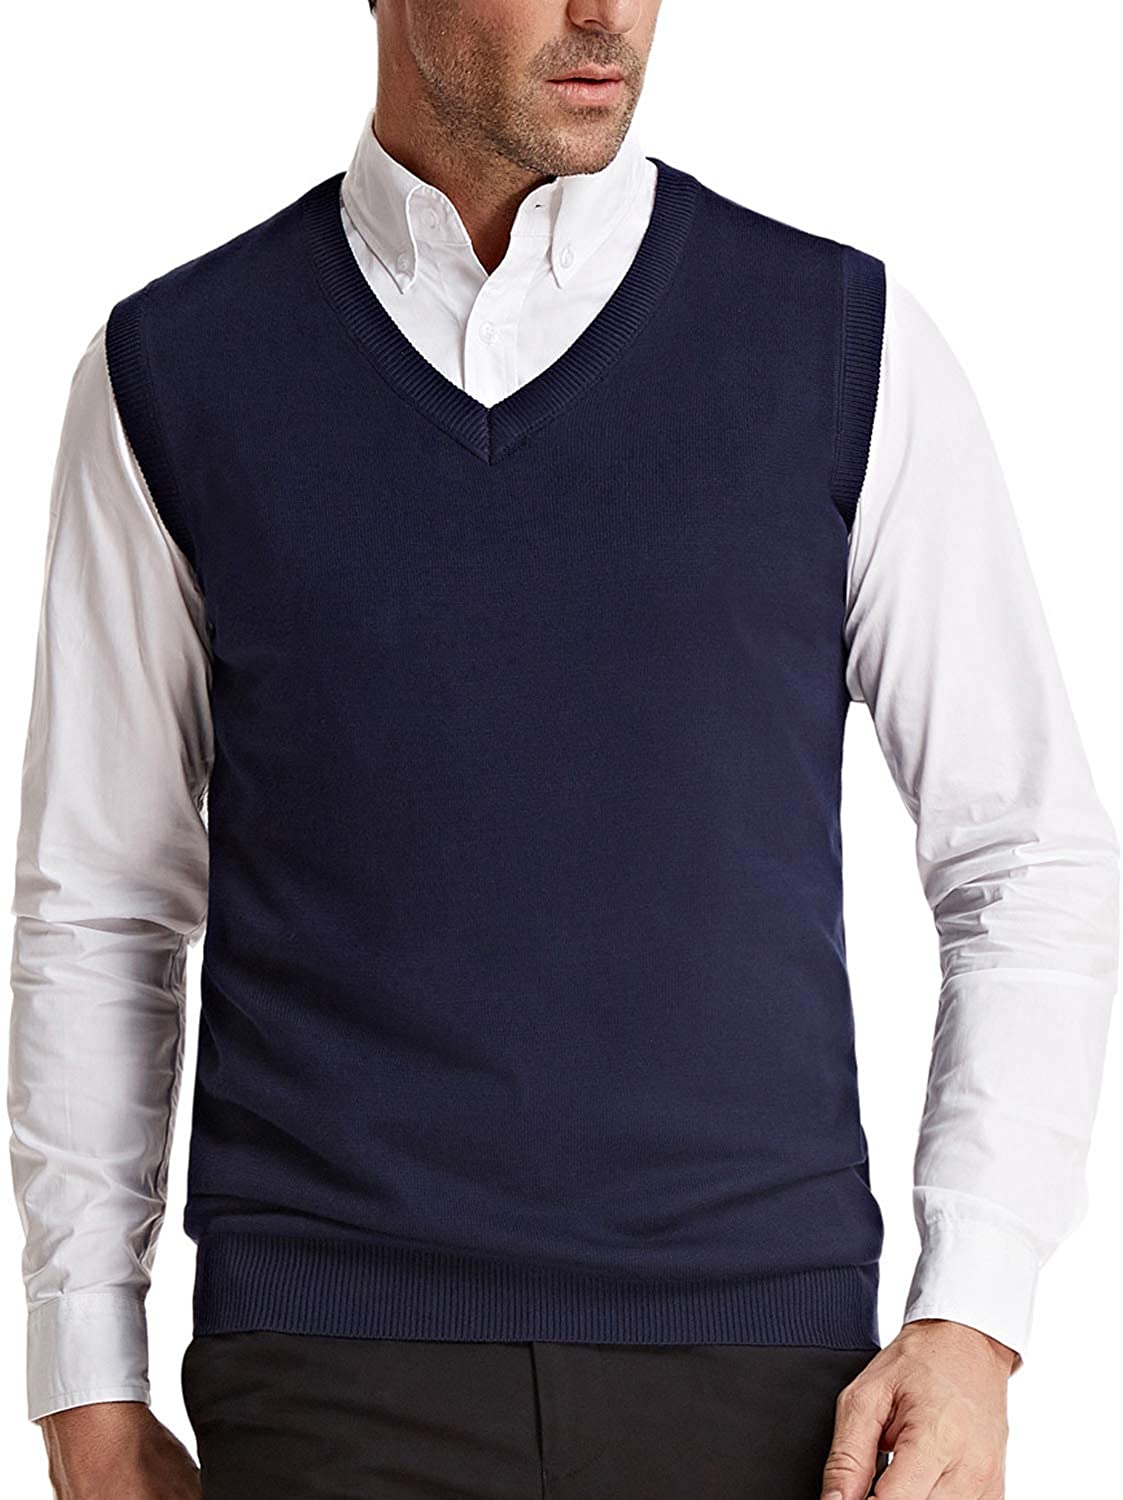 Jack & Jones jumper Navy Blue L discount 56% MEN FASHION Jumpers & Sweatshirts Knitted 